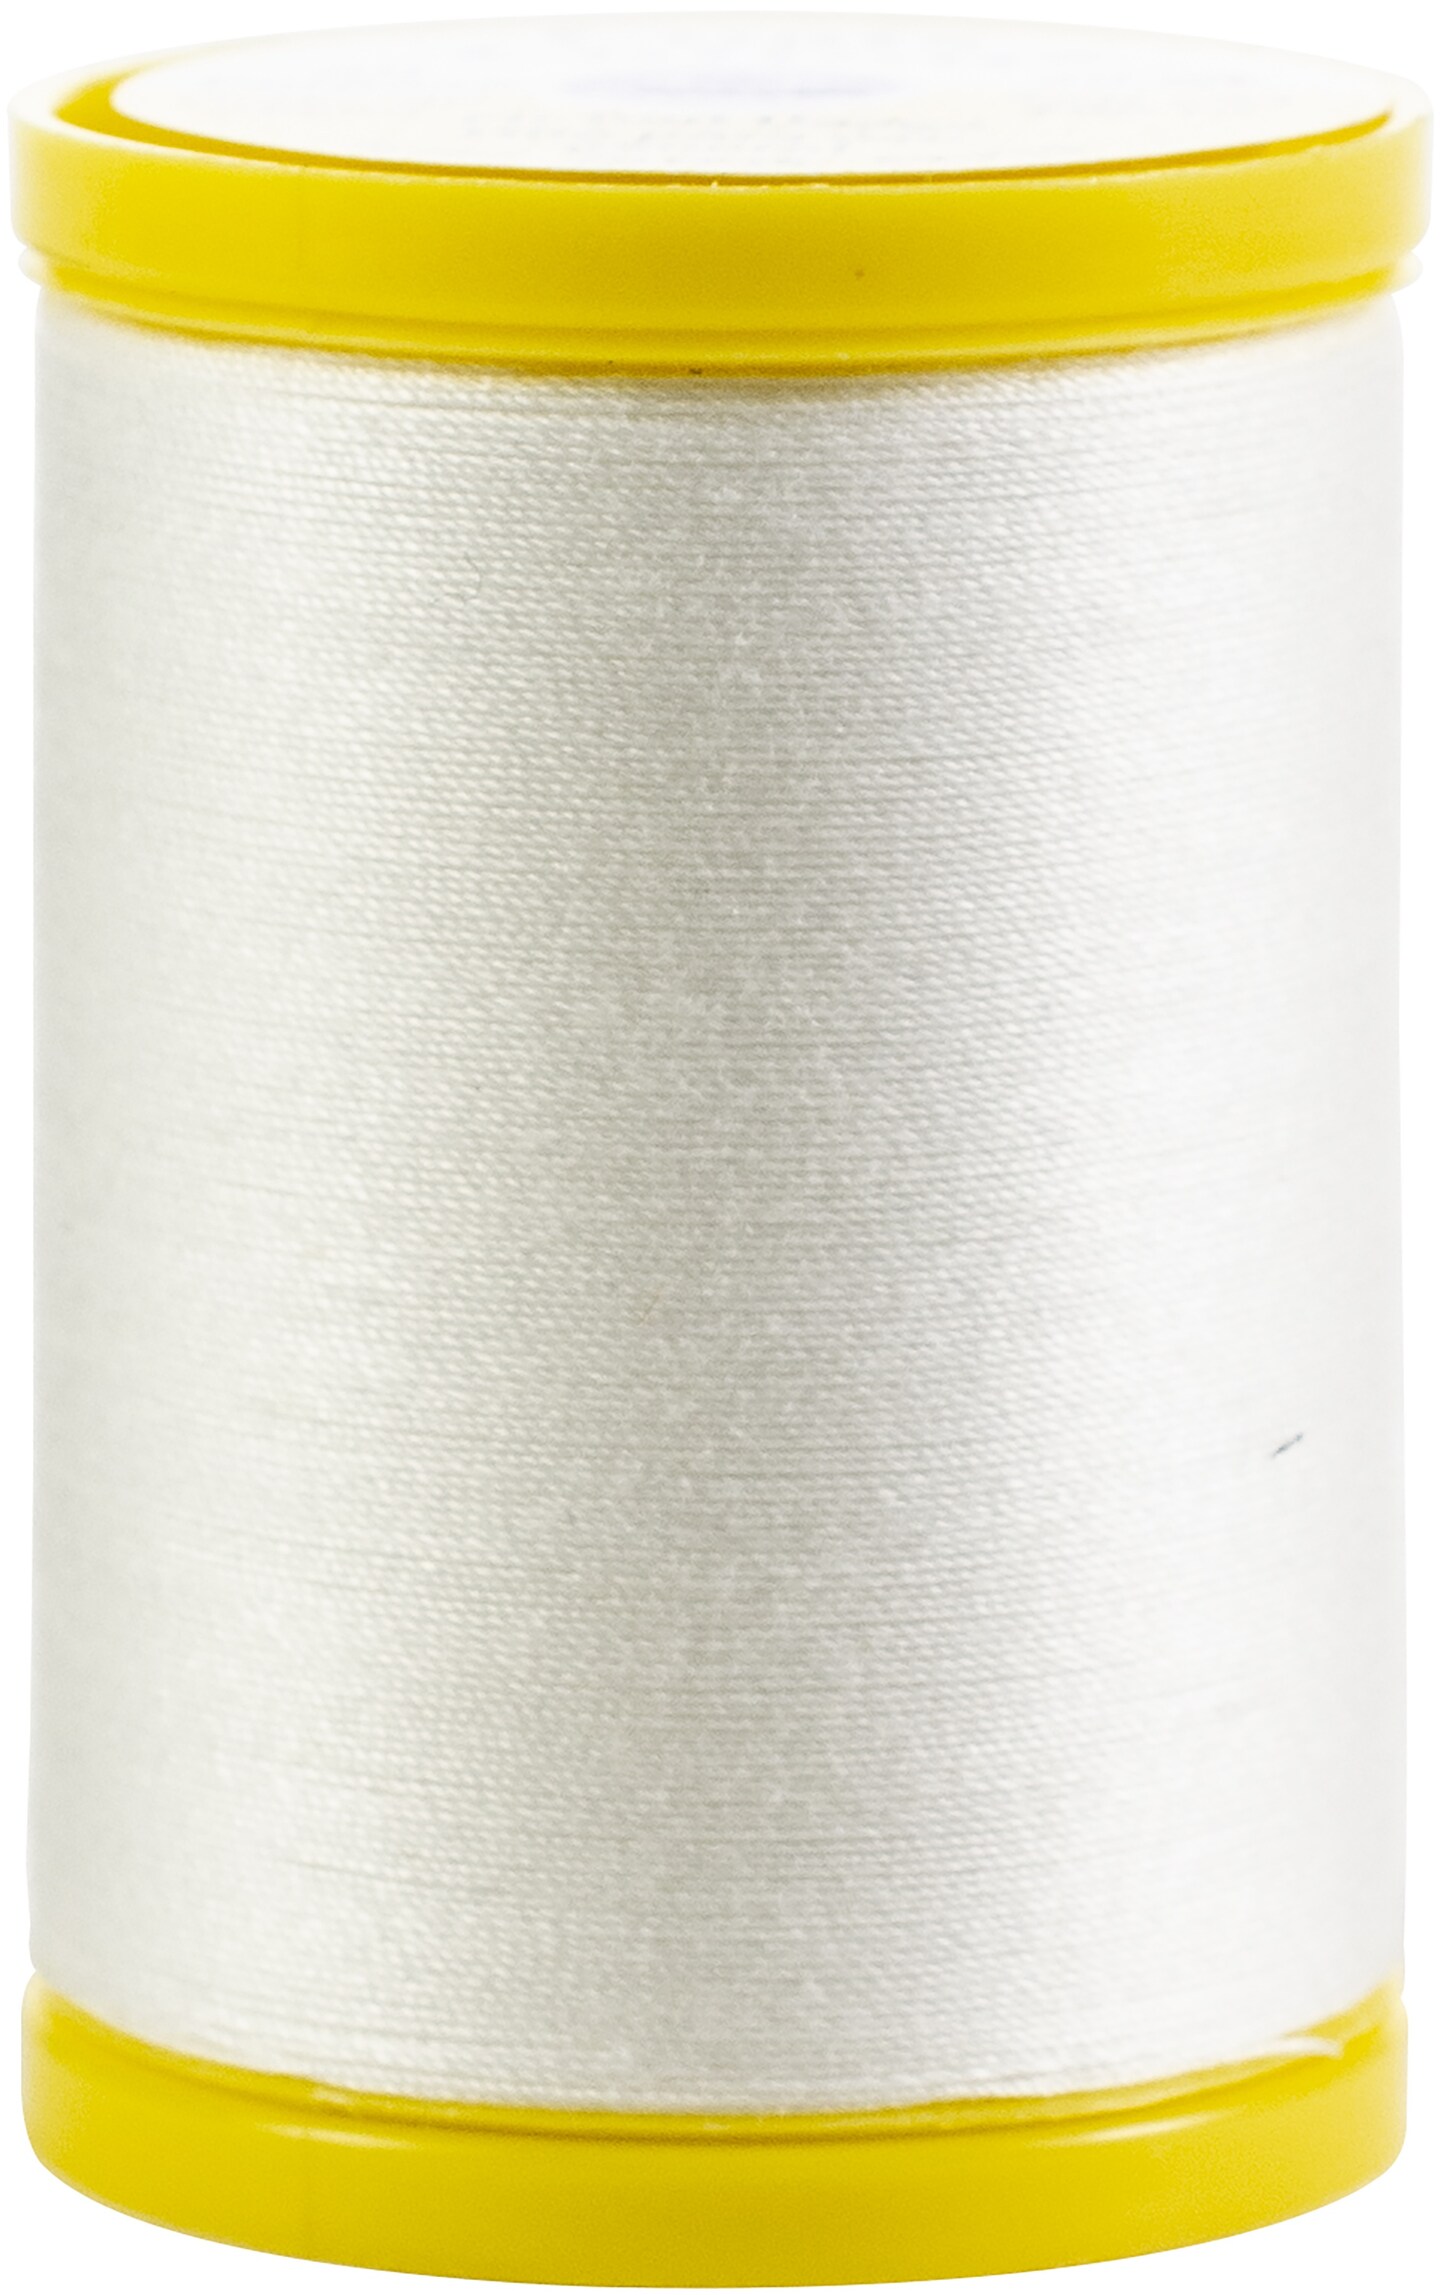 Coats General Purpose Cotton Thread 225yd (White)